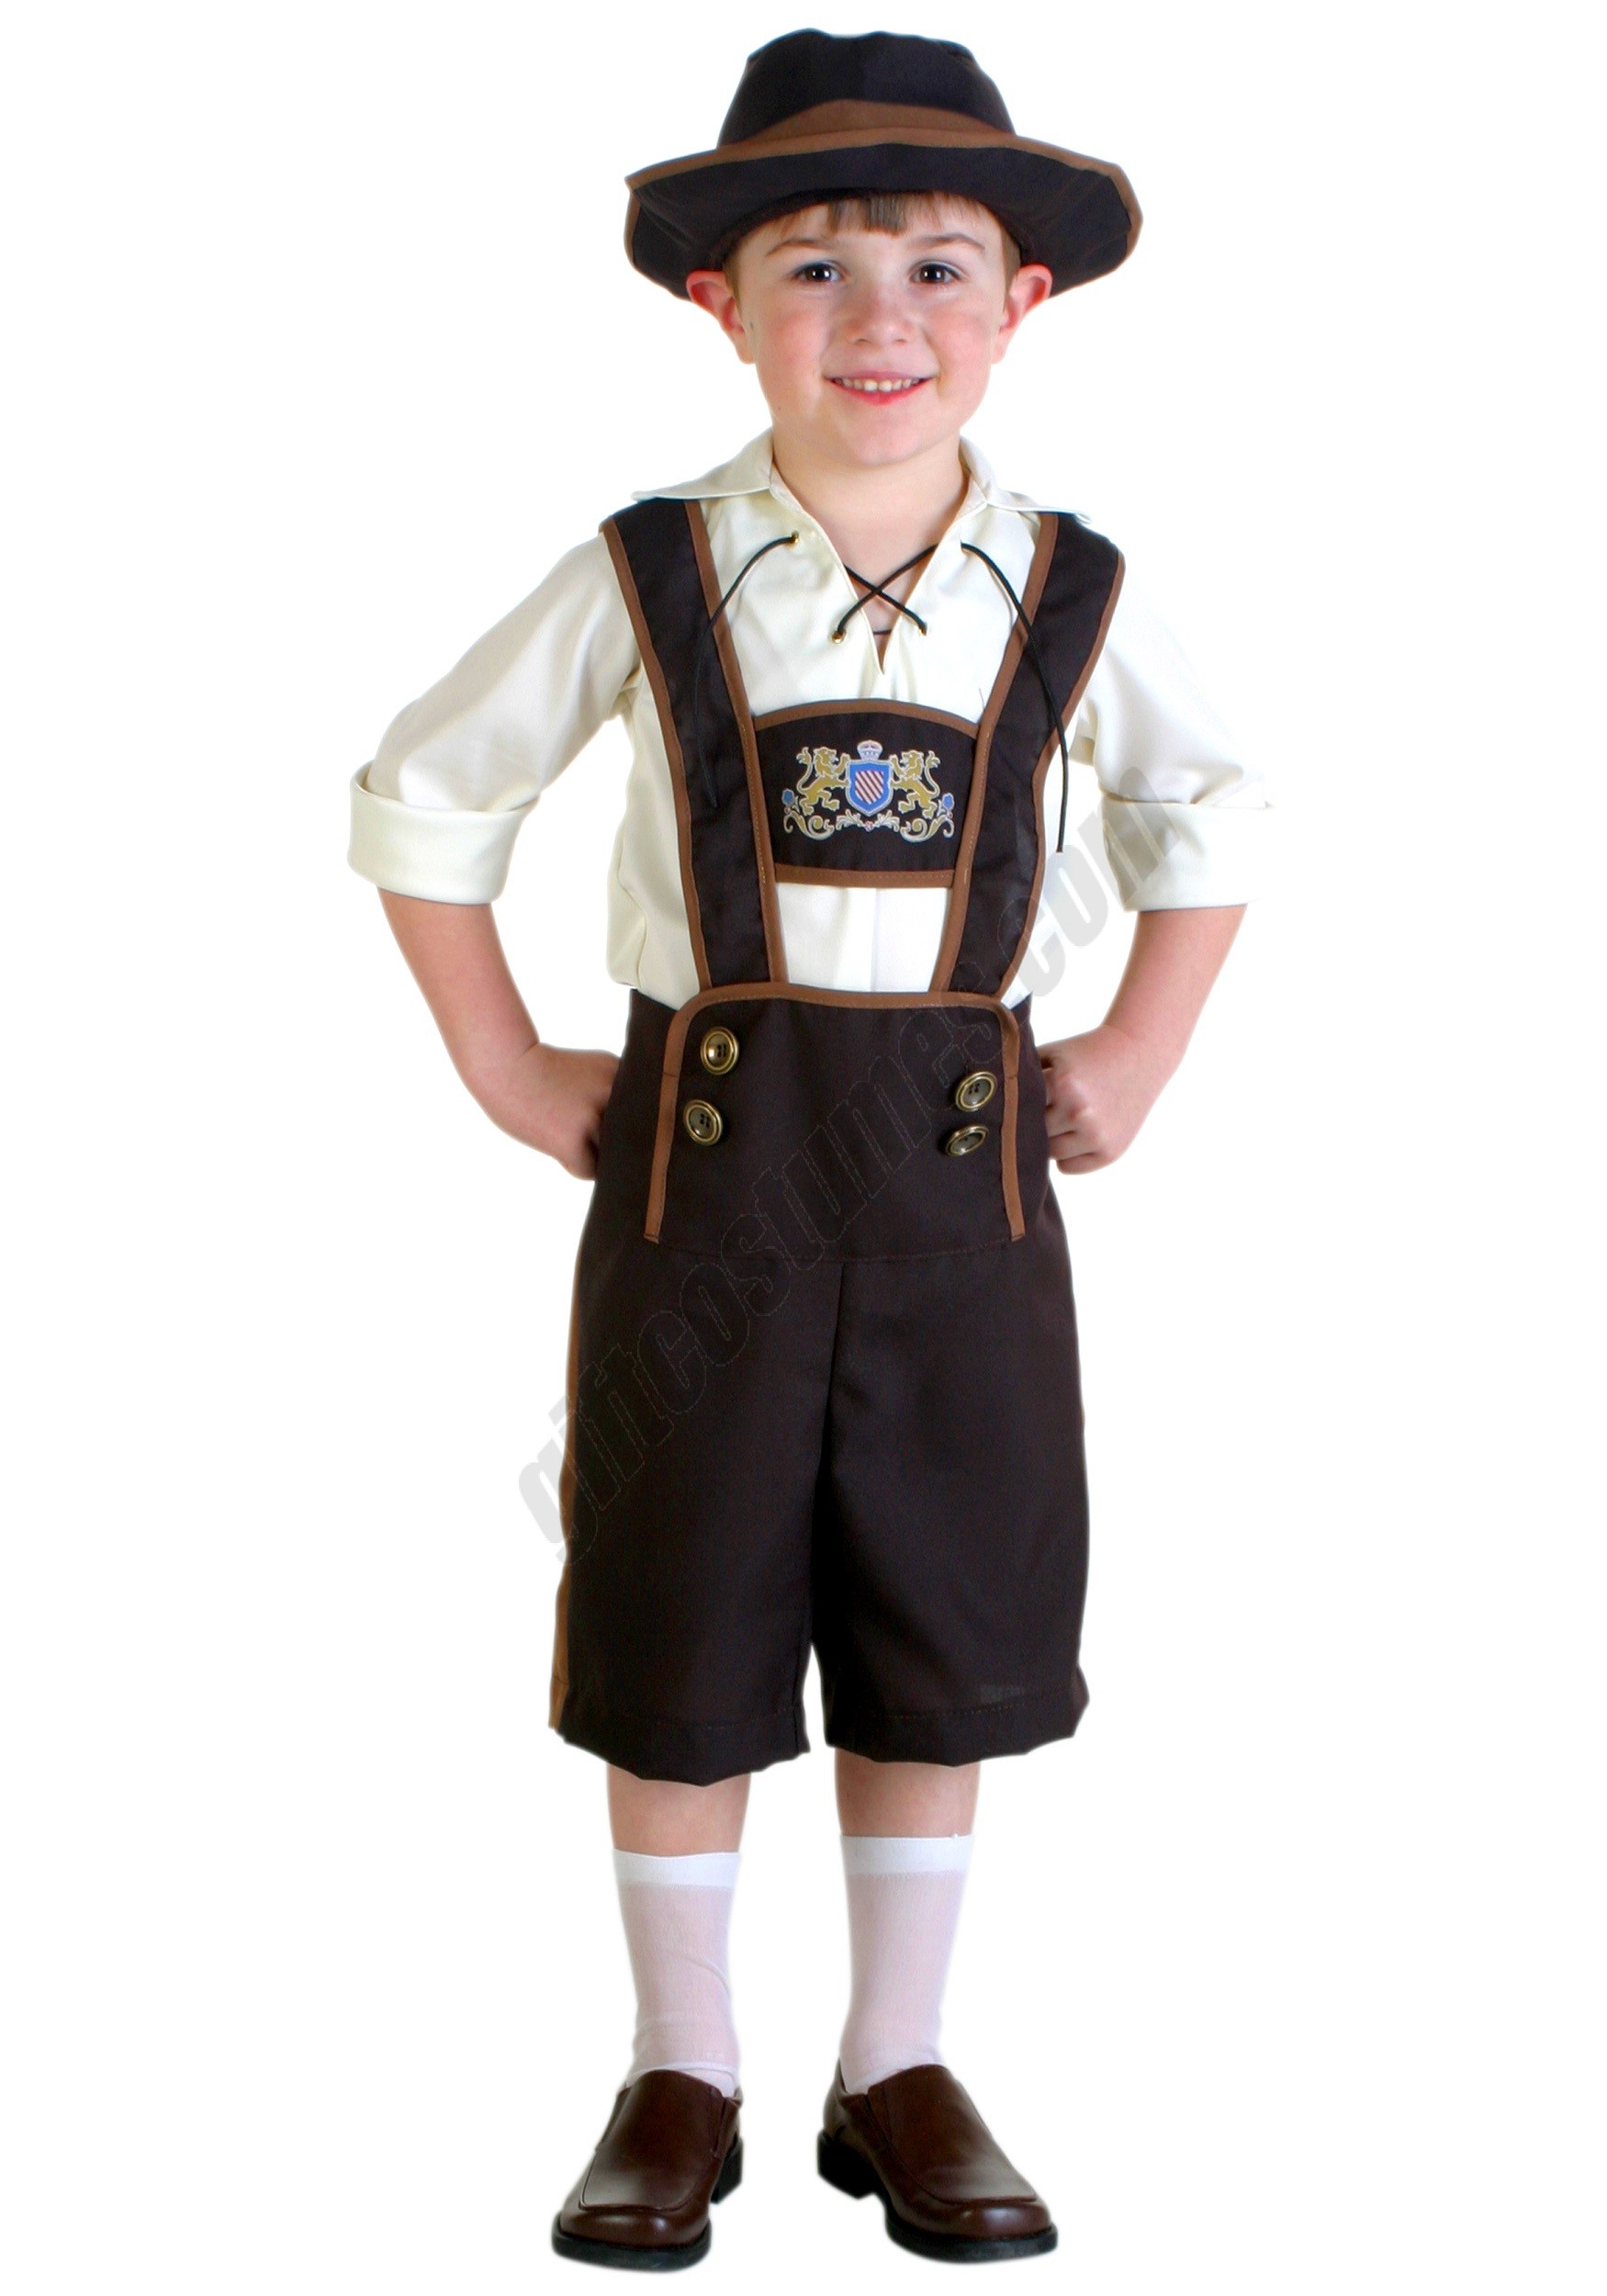 Toddler Lederhosen Boy Costume Promotions - Toddler Lederhosen Boy Costume Promotions